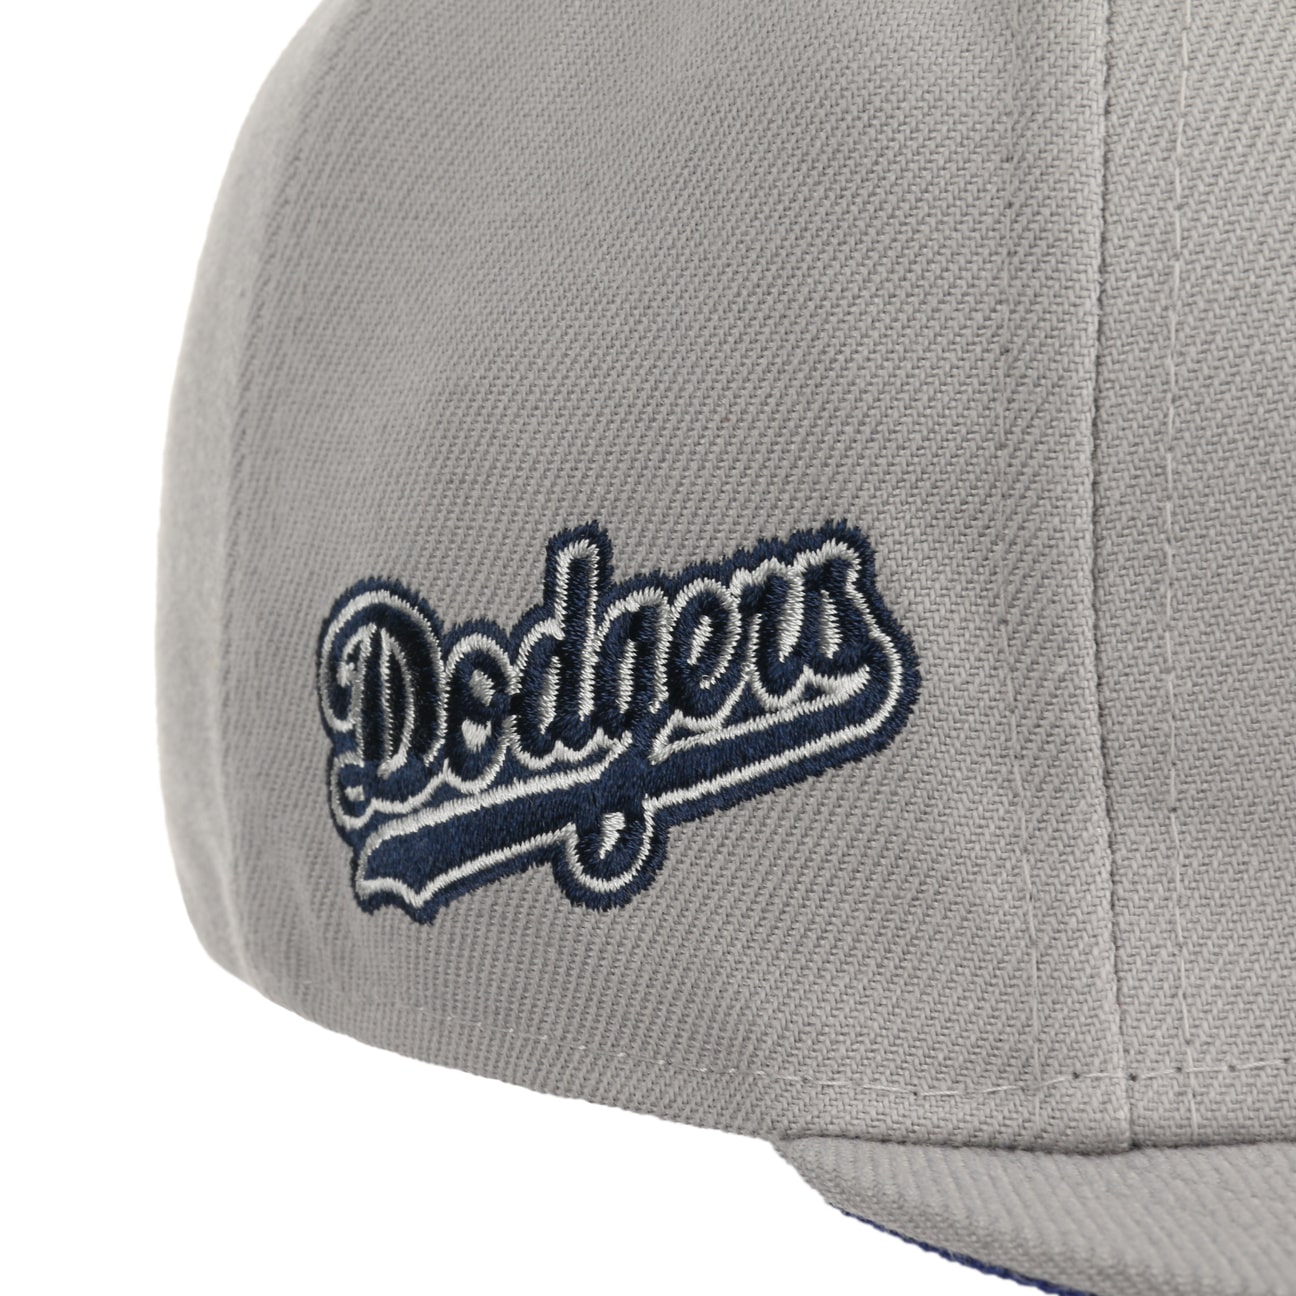 Official L.A. Dodgers Hats, Dodgers Cap, Dodgers Hats, Beanies